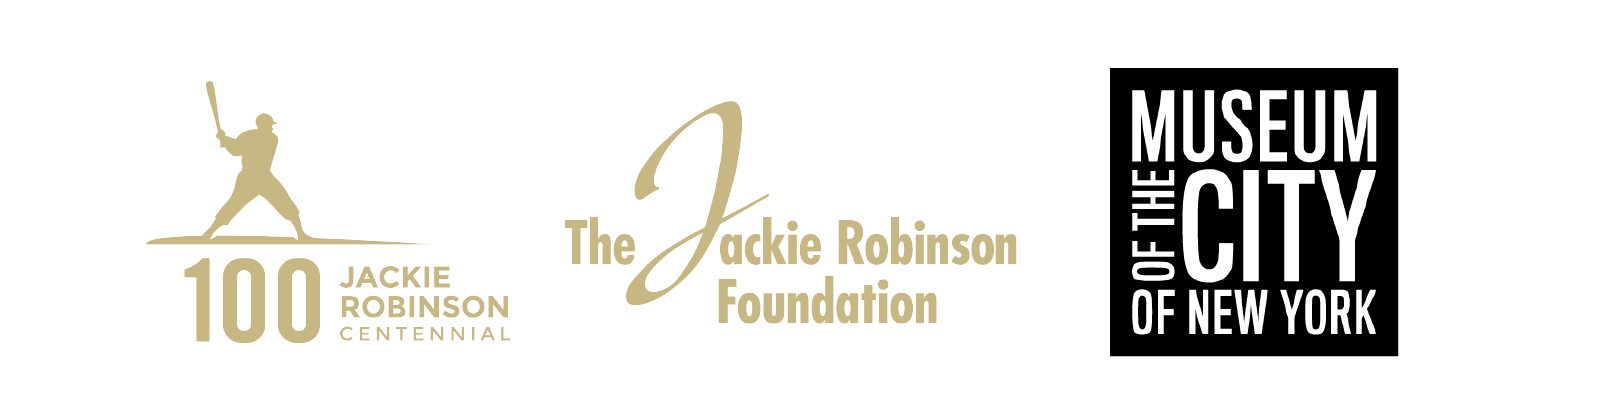 Logo du centenaire Jackie Robinson, logo de la Fondation Jackie Robinson, logo du musée de la ville de New York